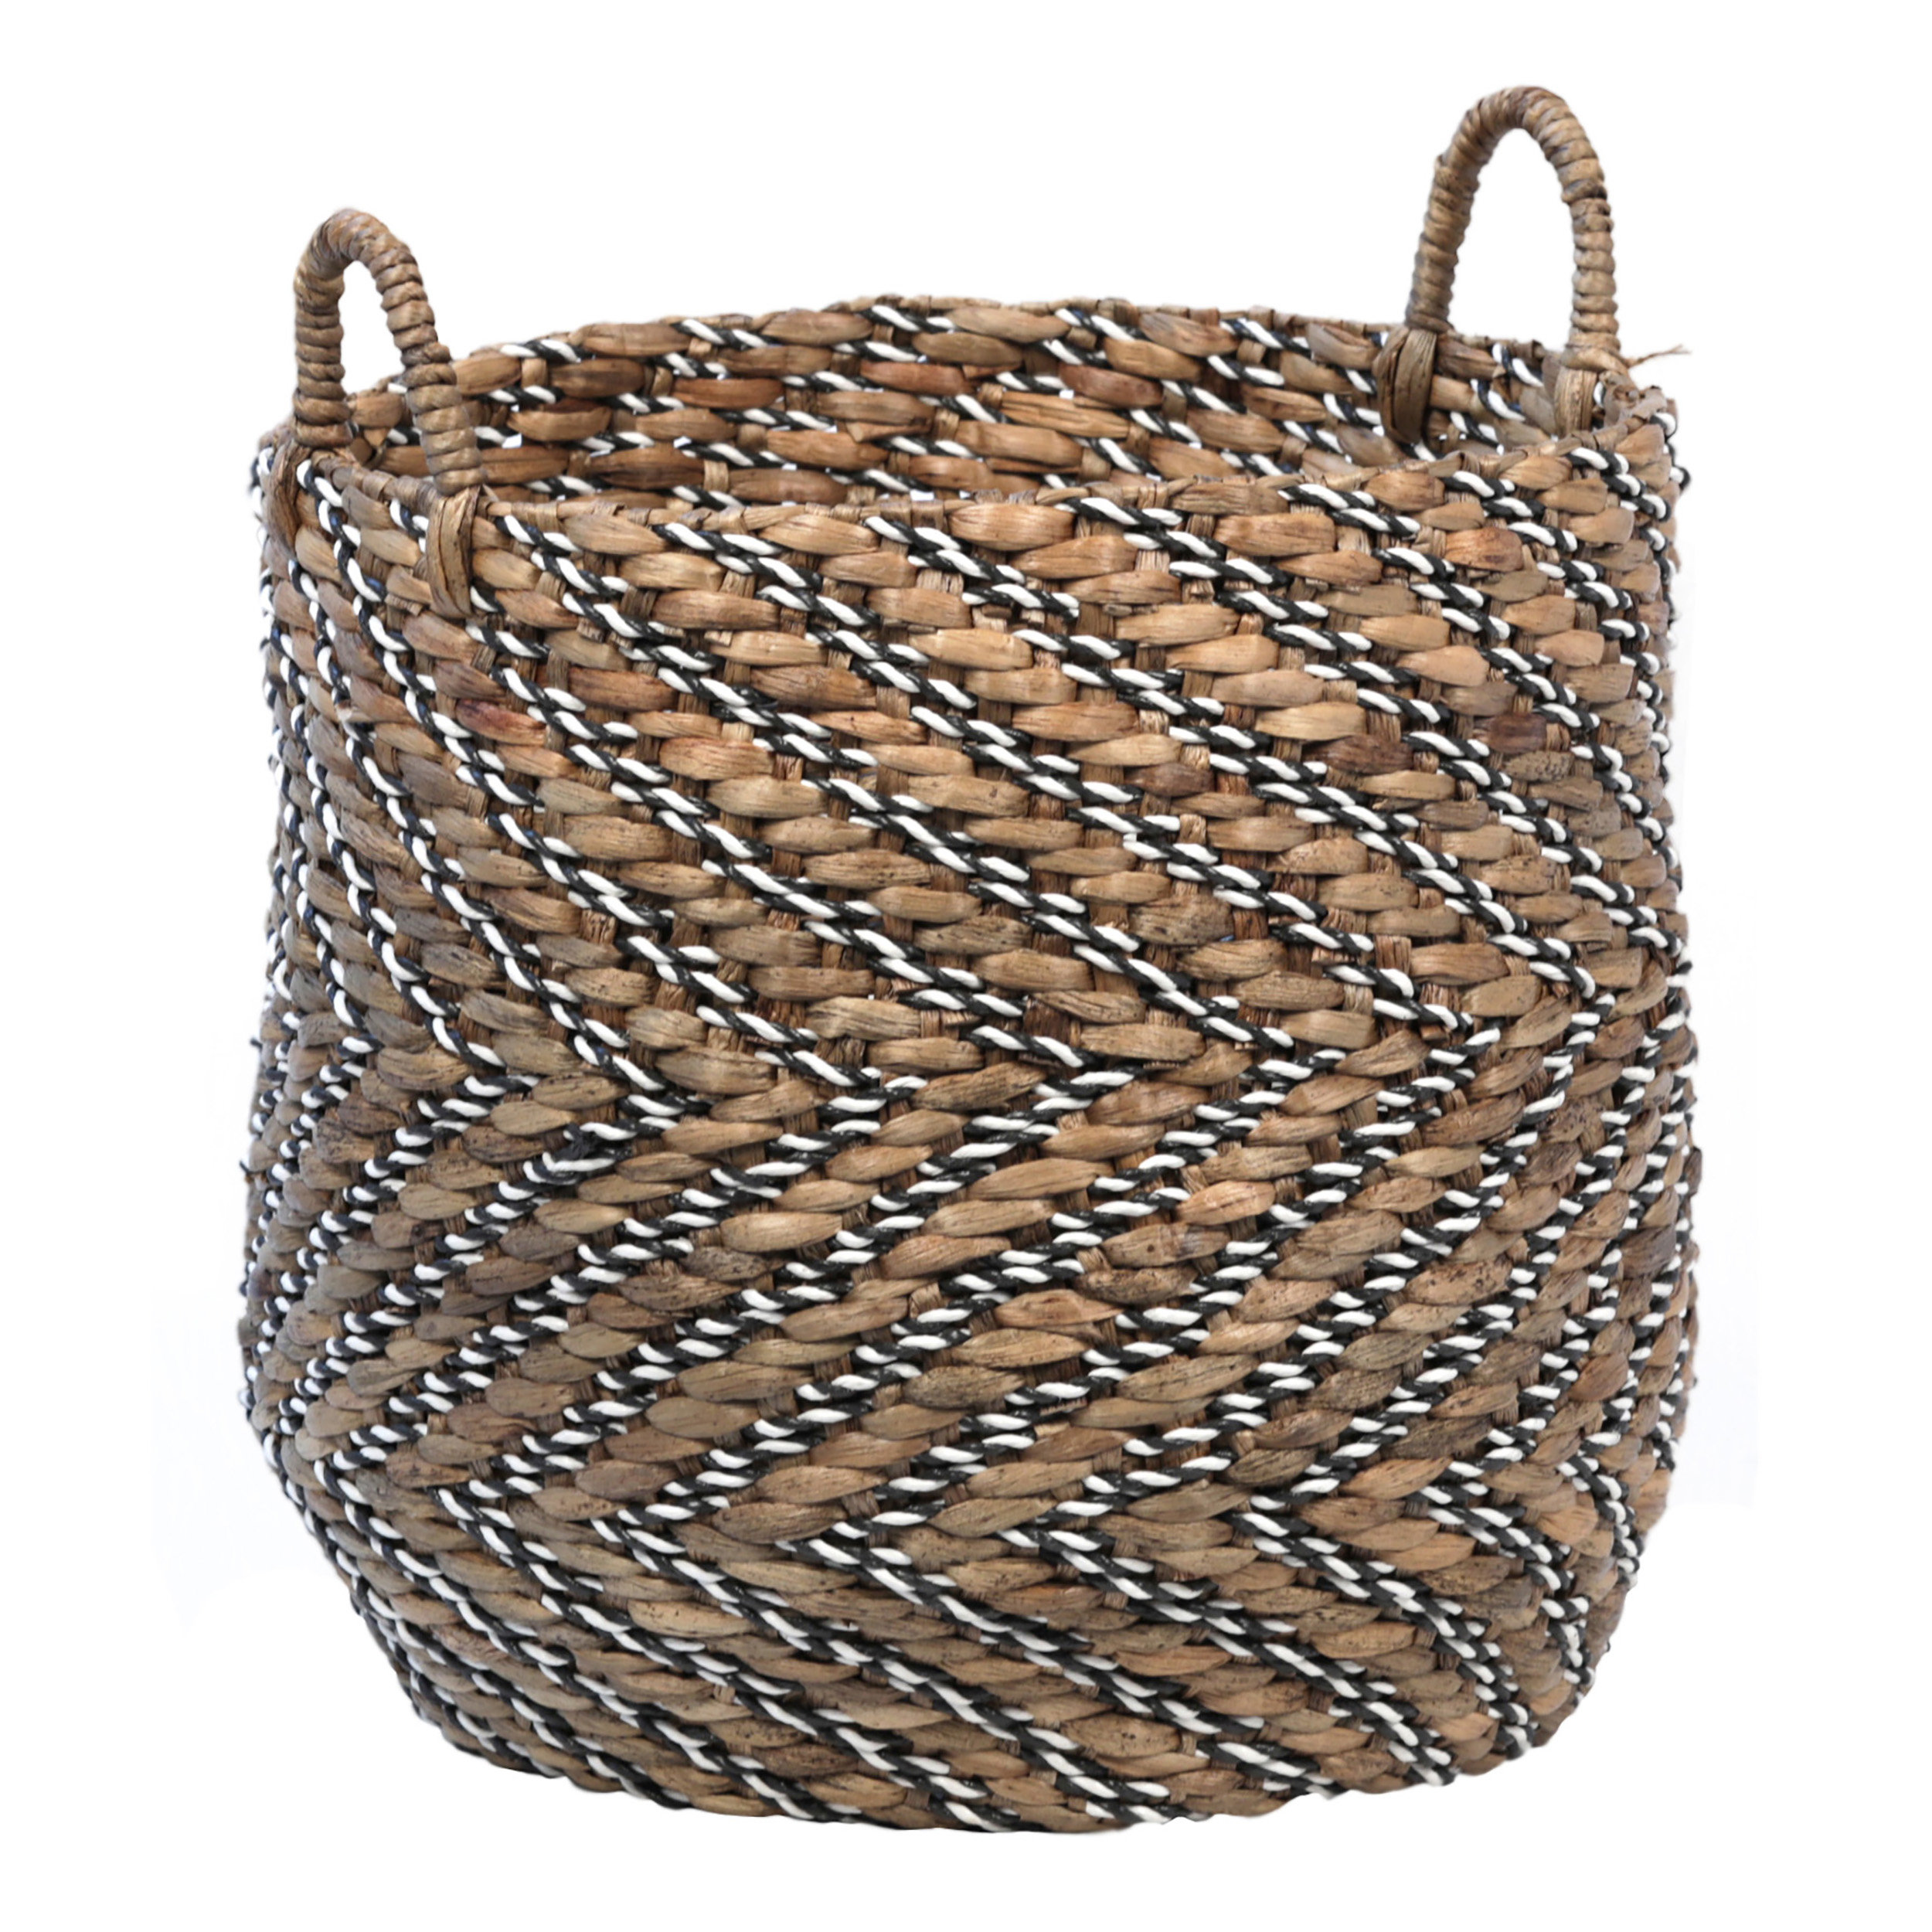 Natural Woven Grass Floor Basket - Medium - The Foundry Home Goods